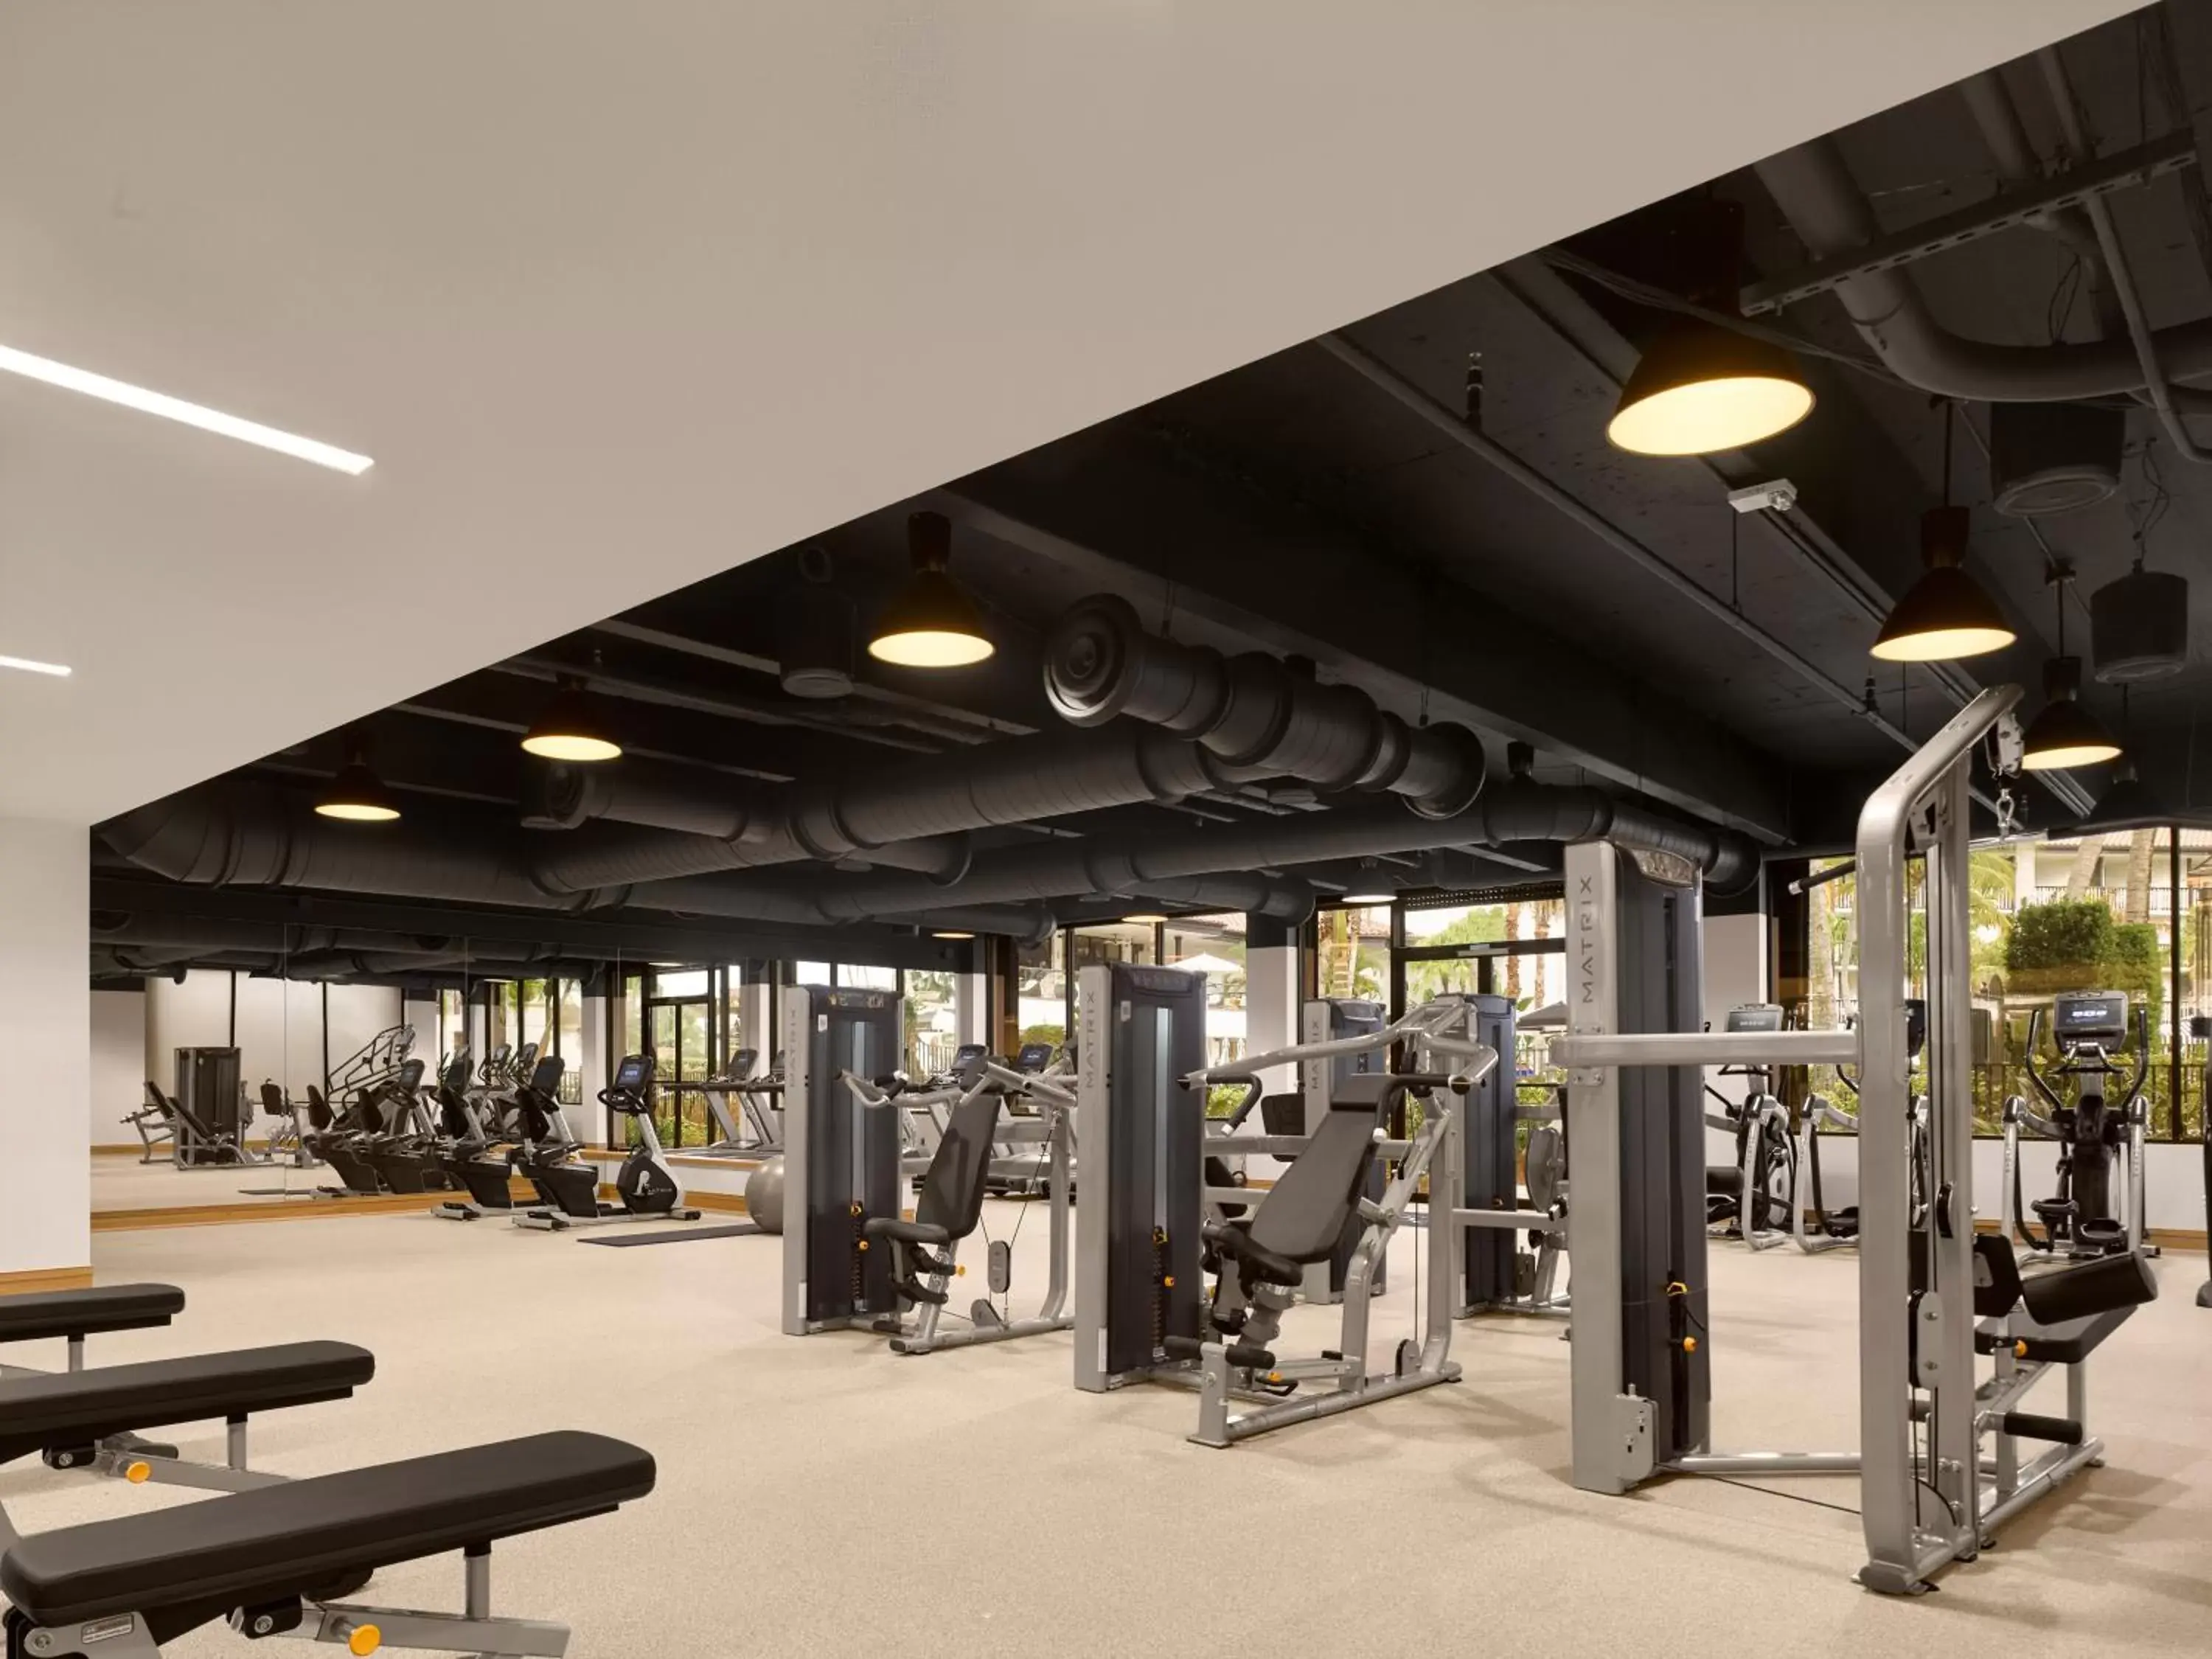 Fitness centre/facilities, Fitness Center/Facilities in PGA National Resort